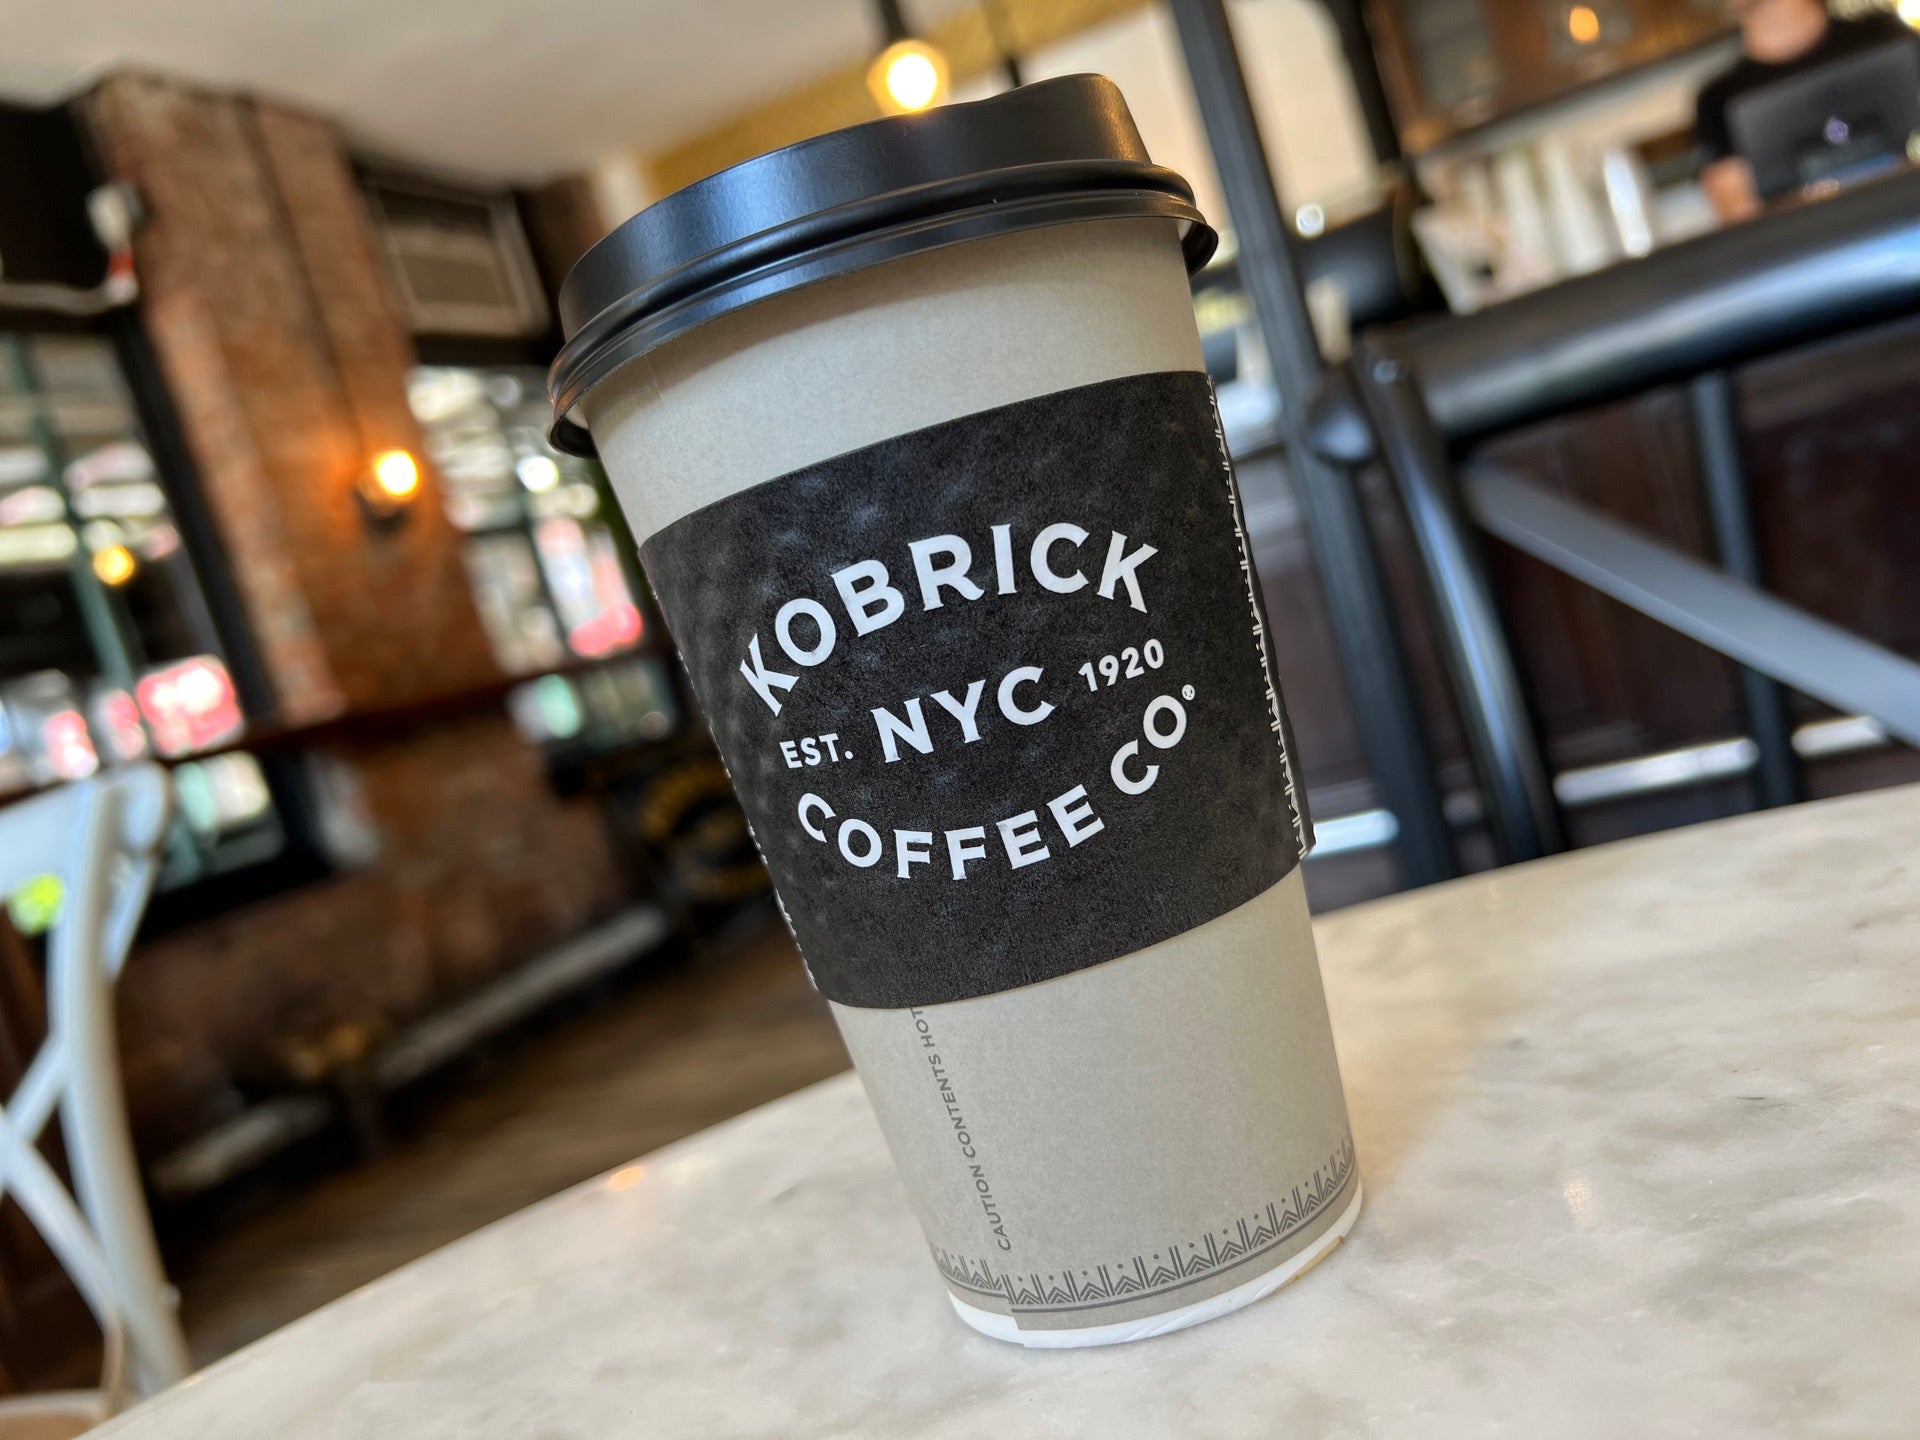 Kobrick Coffee Co